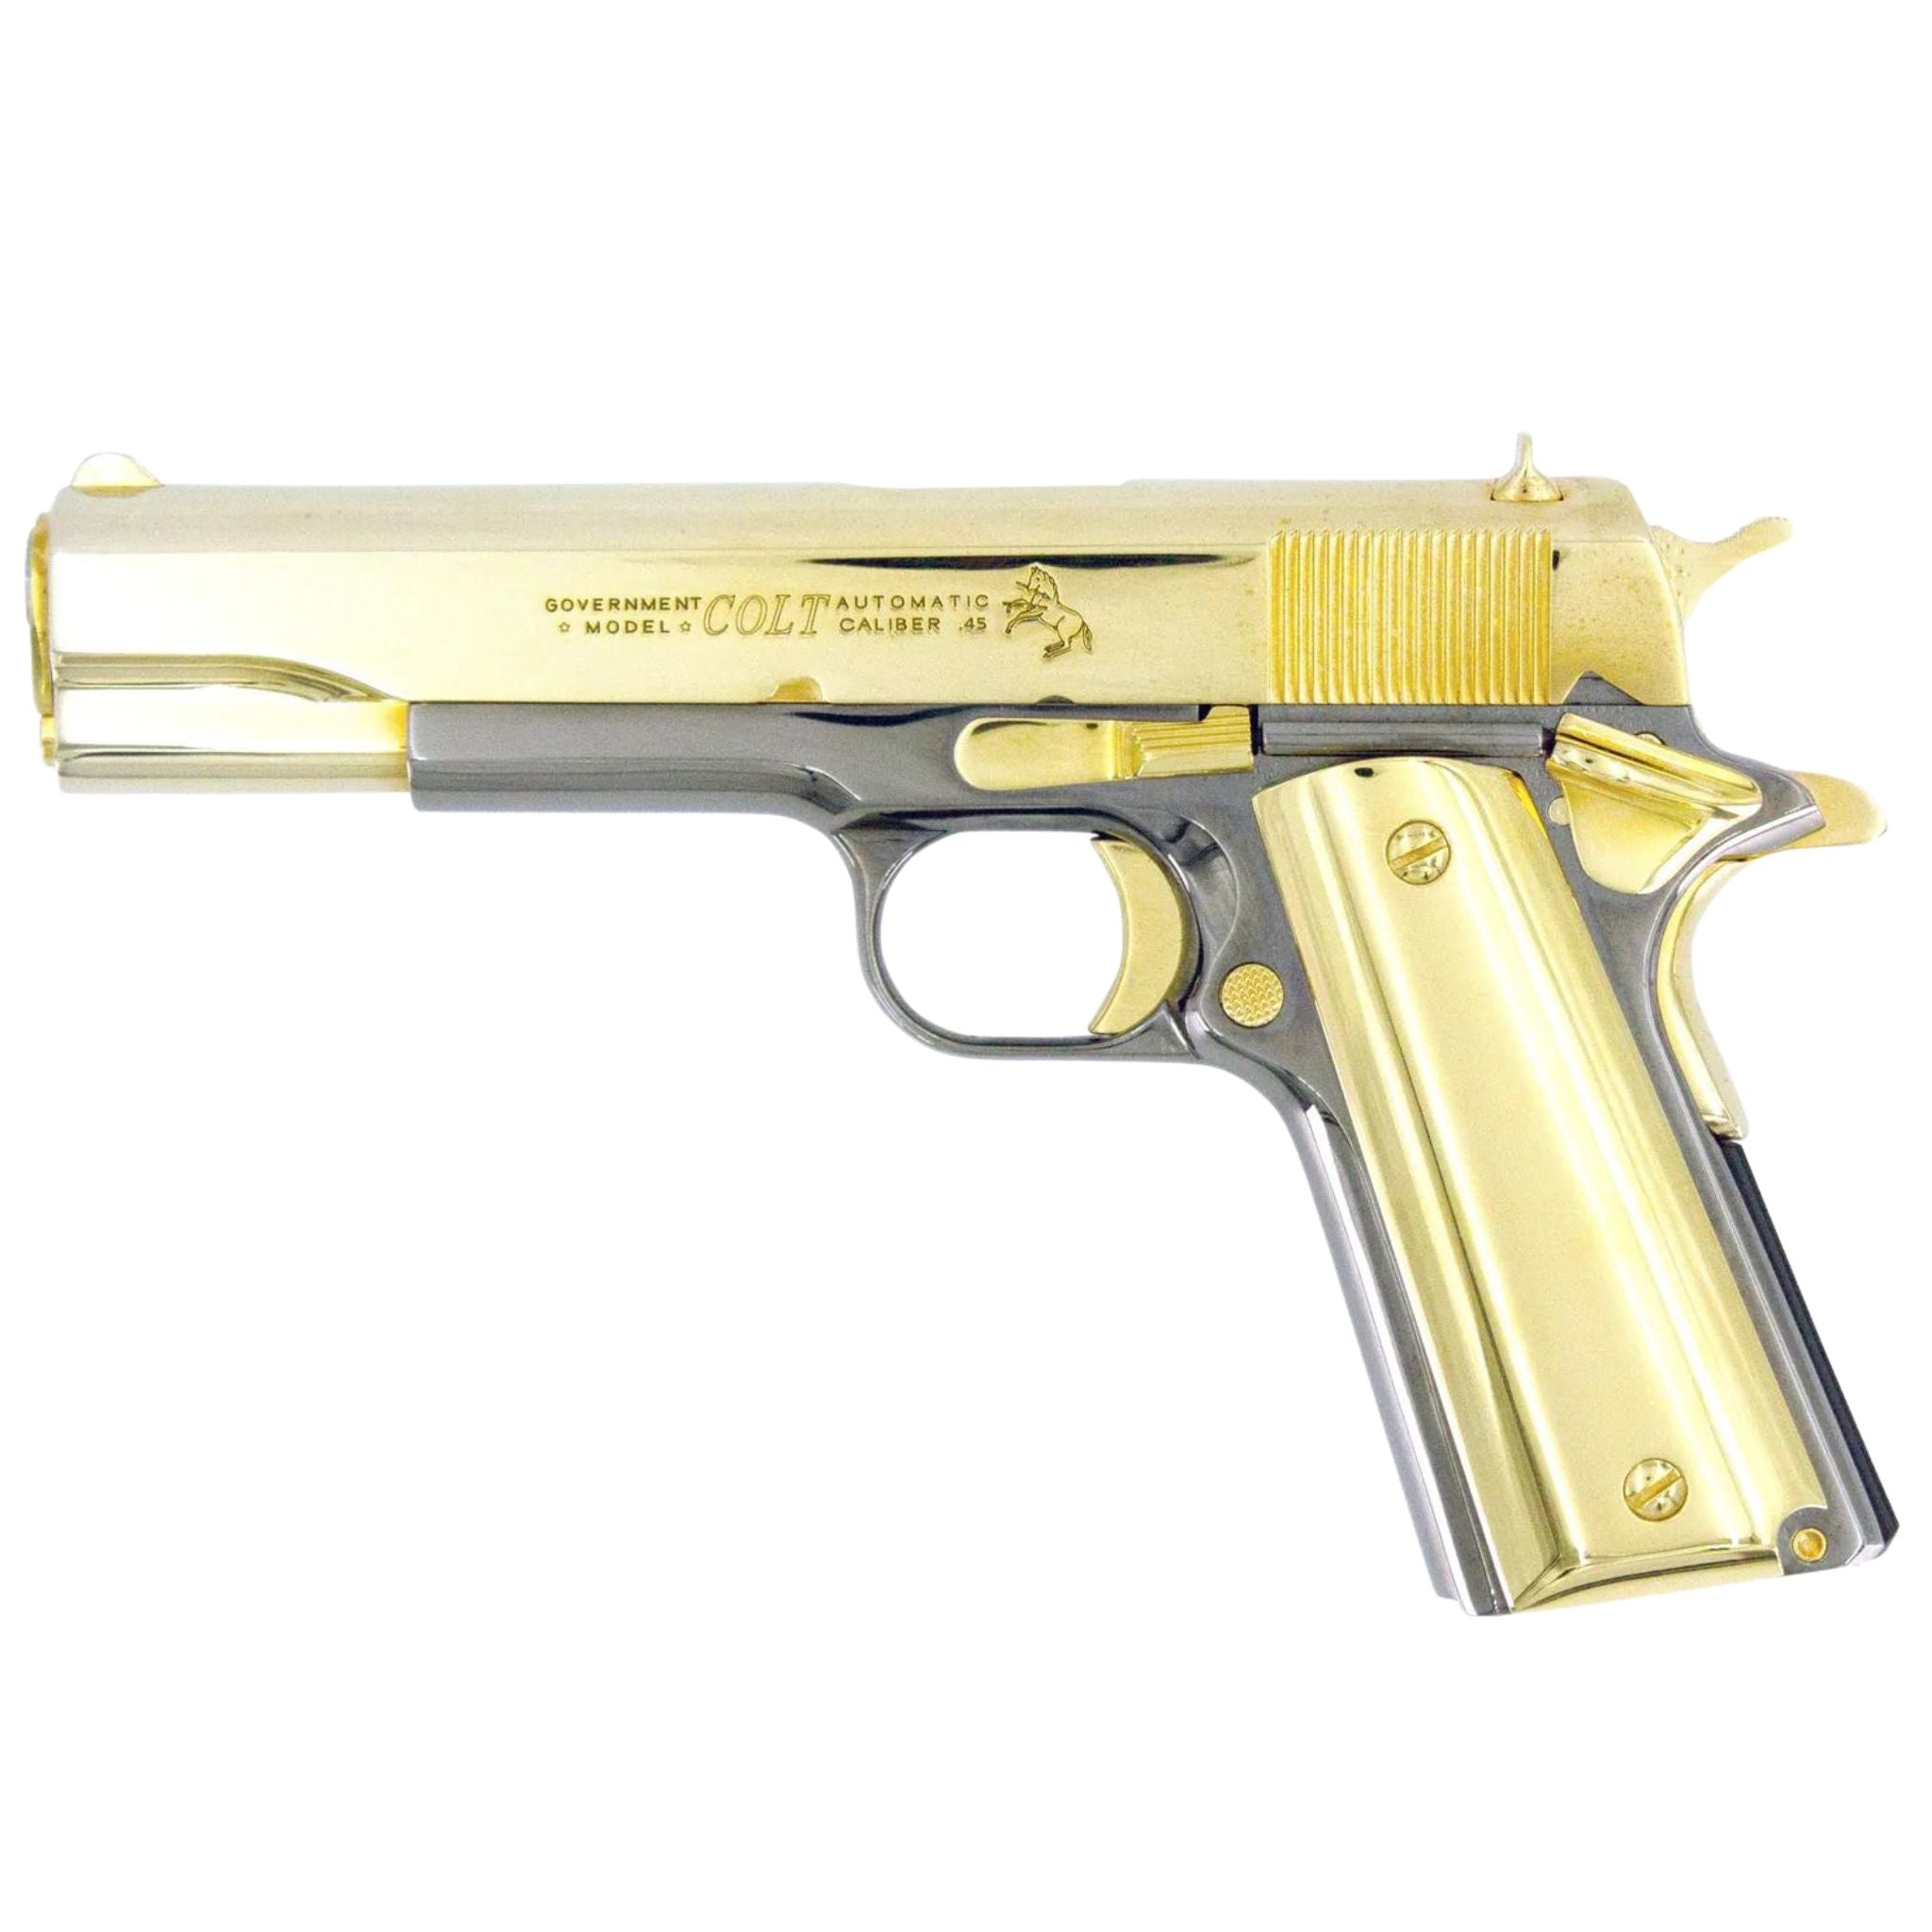 Colt 1911 Government, 45ACP, 24K Gold Plated Slide & Accents with a Black Chrome Mirror Finish, SKU: 4850958237798, 24 karat gold gun, 24 Karat Gold Firearm